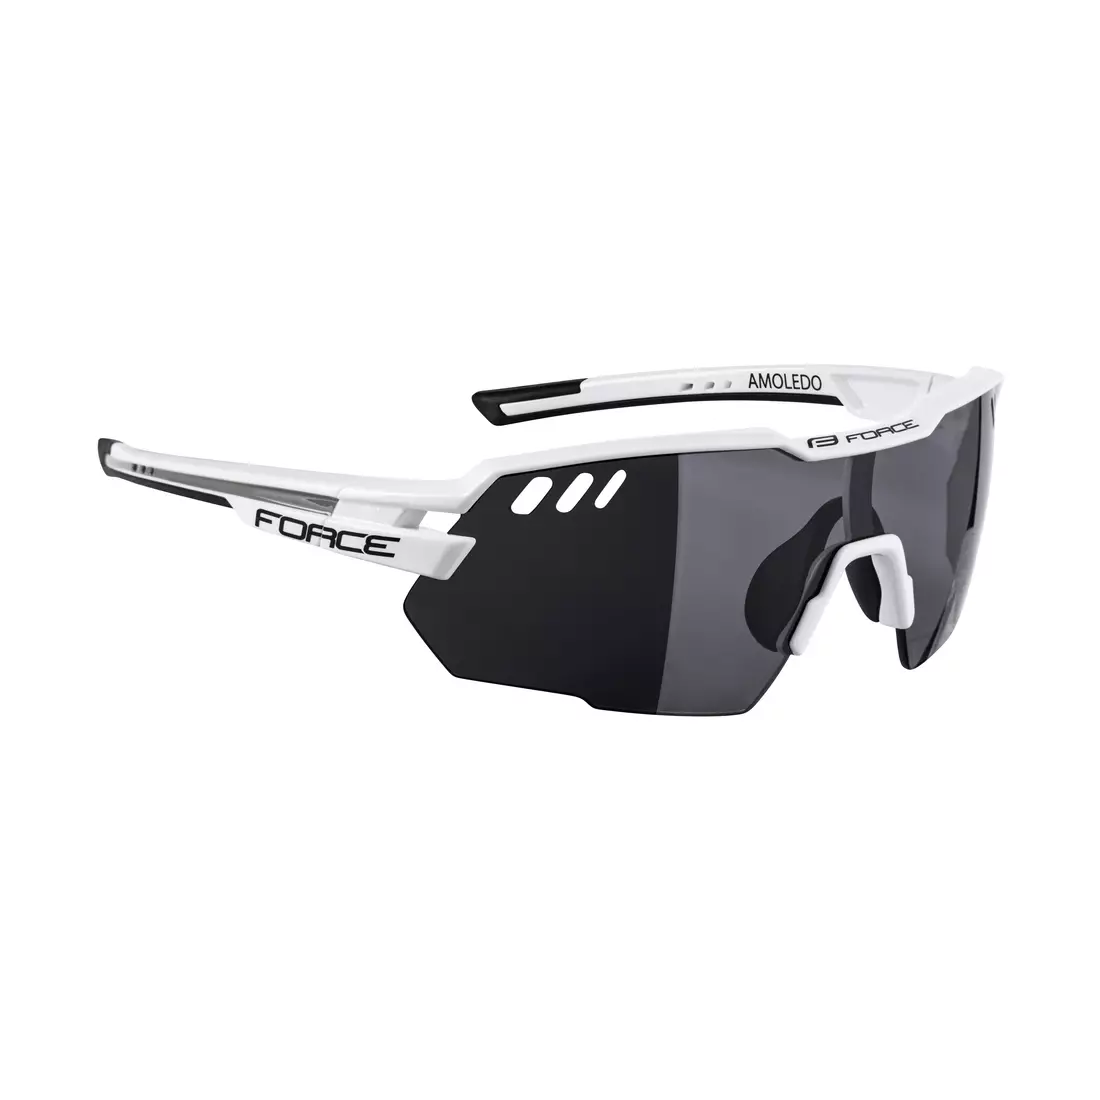 FORCE sports glasses AMOLEDO, white-gray 910871